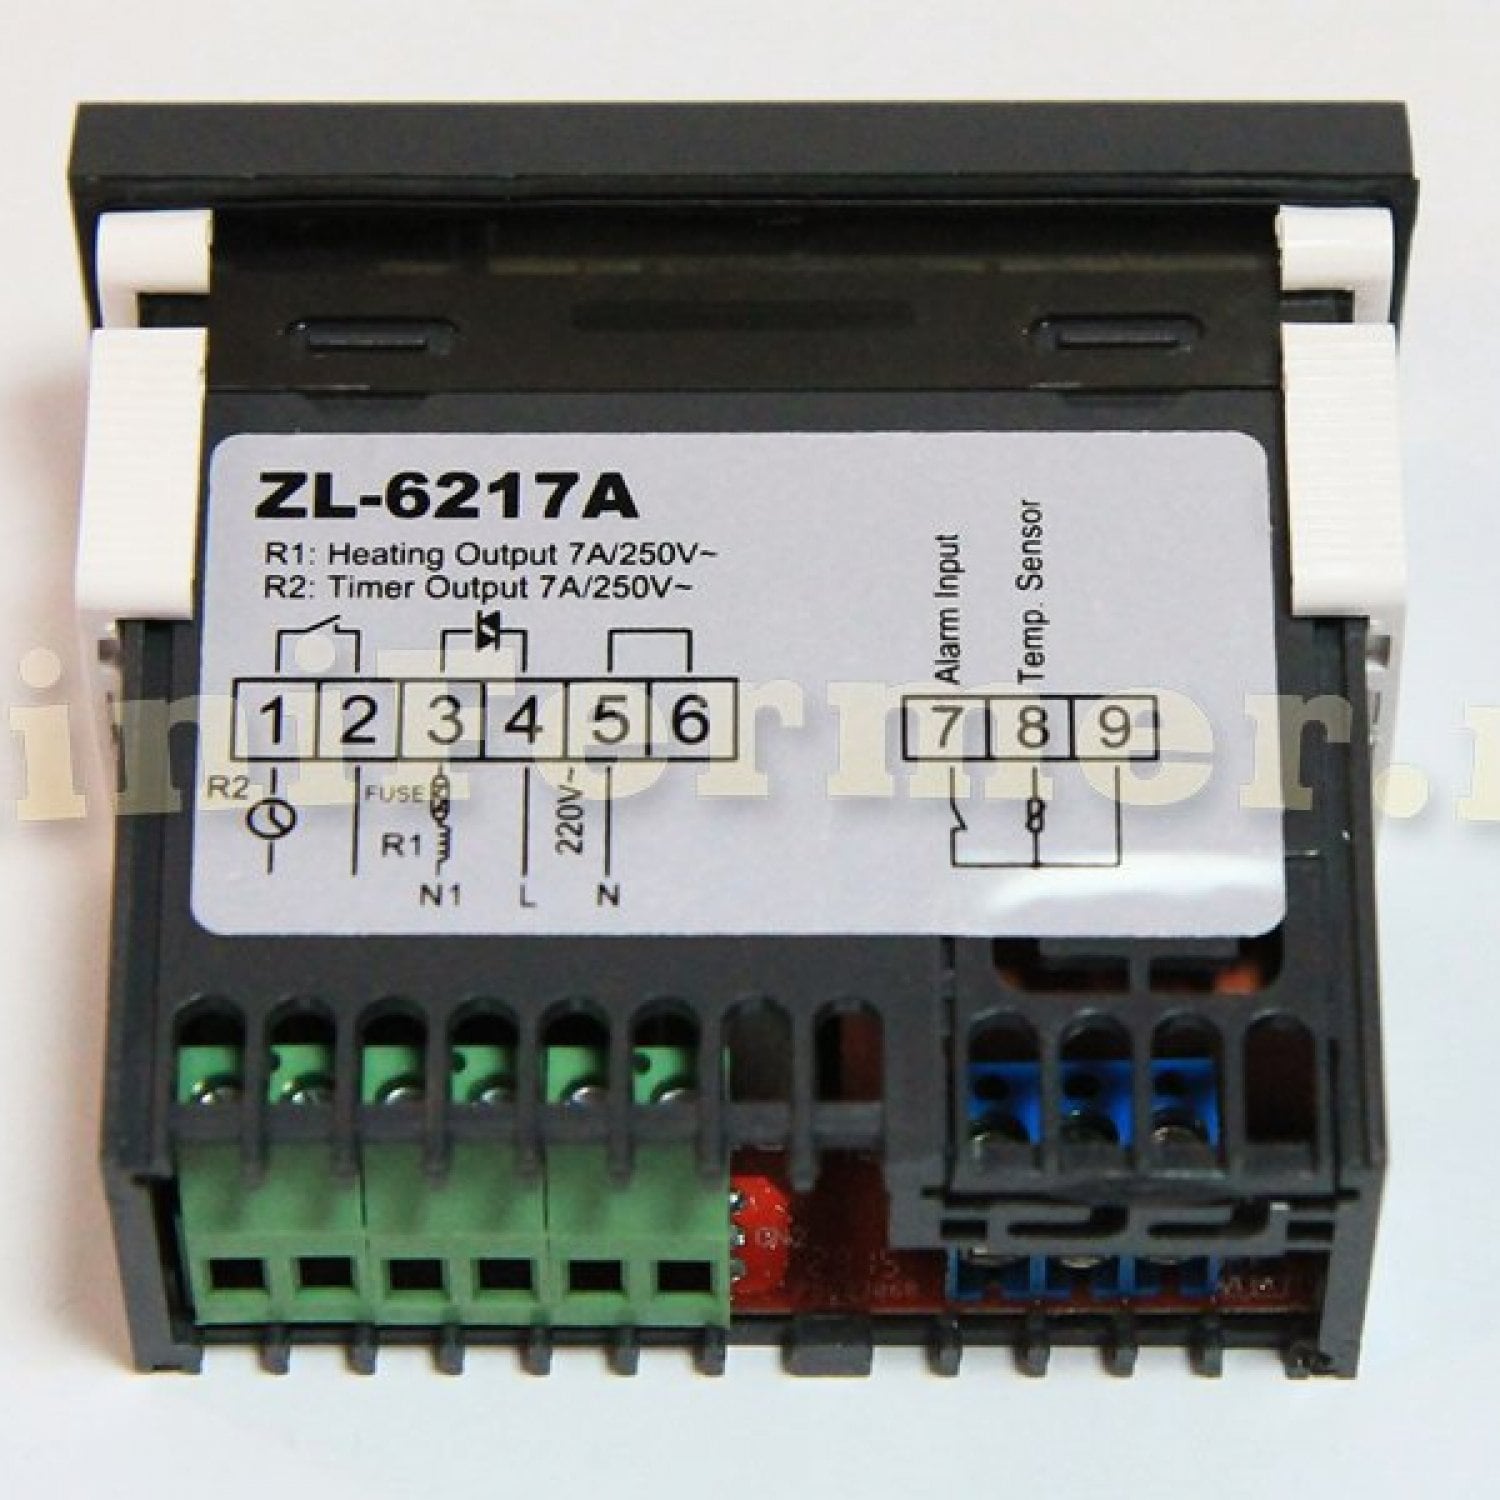 Терморегулятор LILYTECH ZL-7817A (7А) (пид-регулятор  предыдущая 6217А)